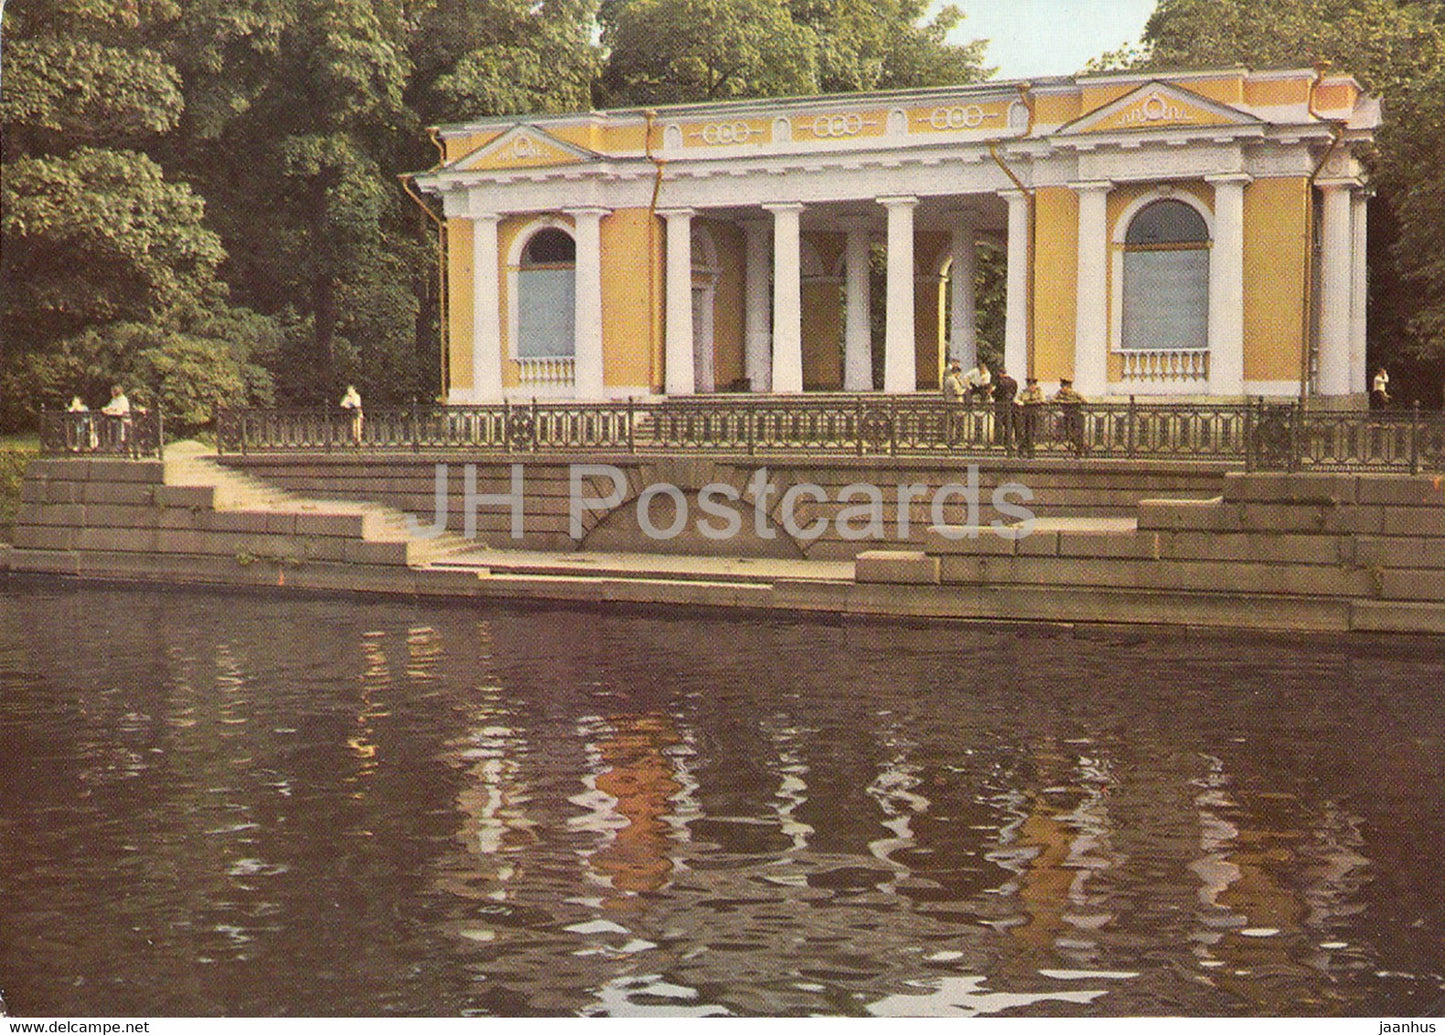 Leningrad - St Petersburg - Pavilion in the Mikhailovskoe Garden - postal stationery - 1973 - Russia USSR - unused - JH Postcards